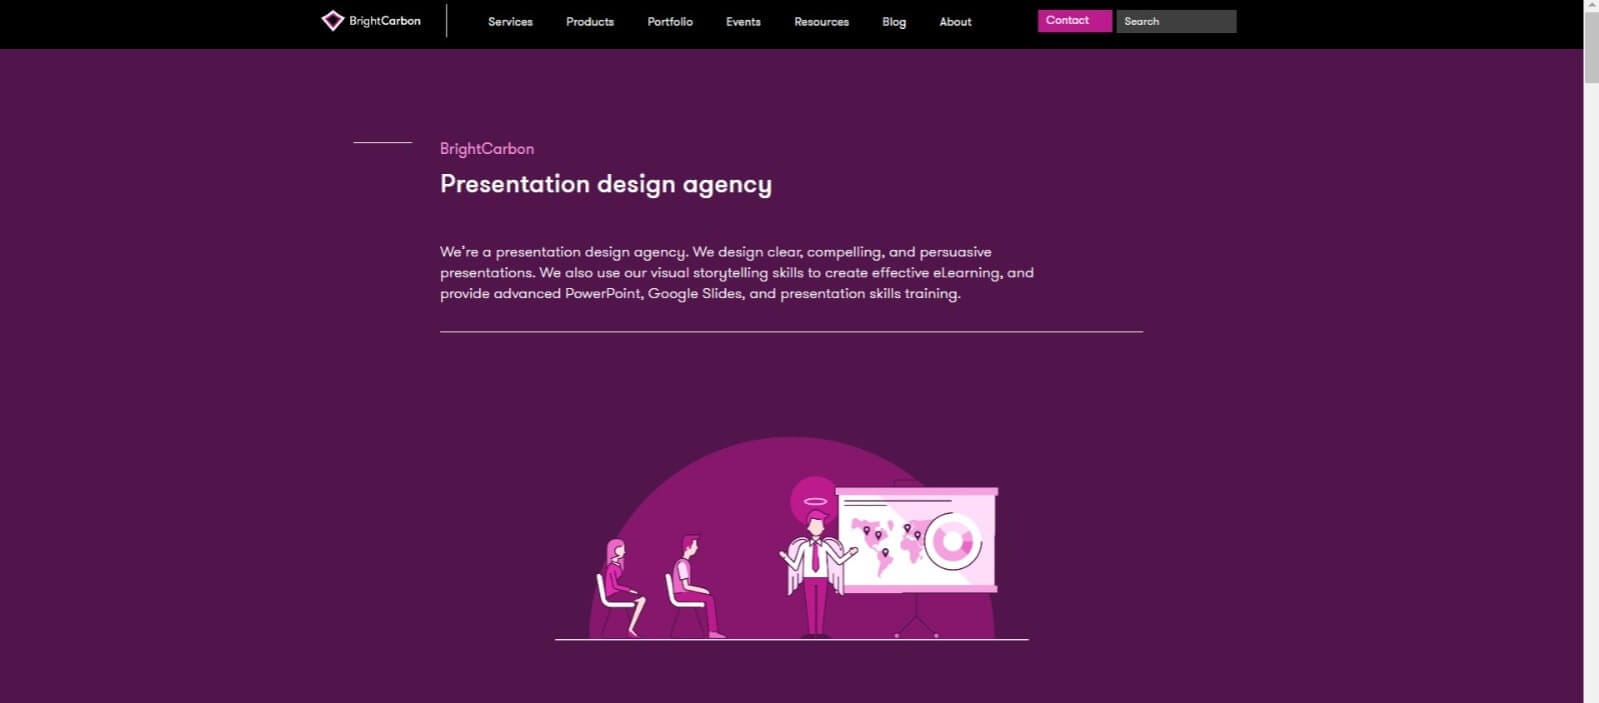 BrightCarbon Presentation Design Agency